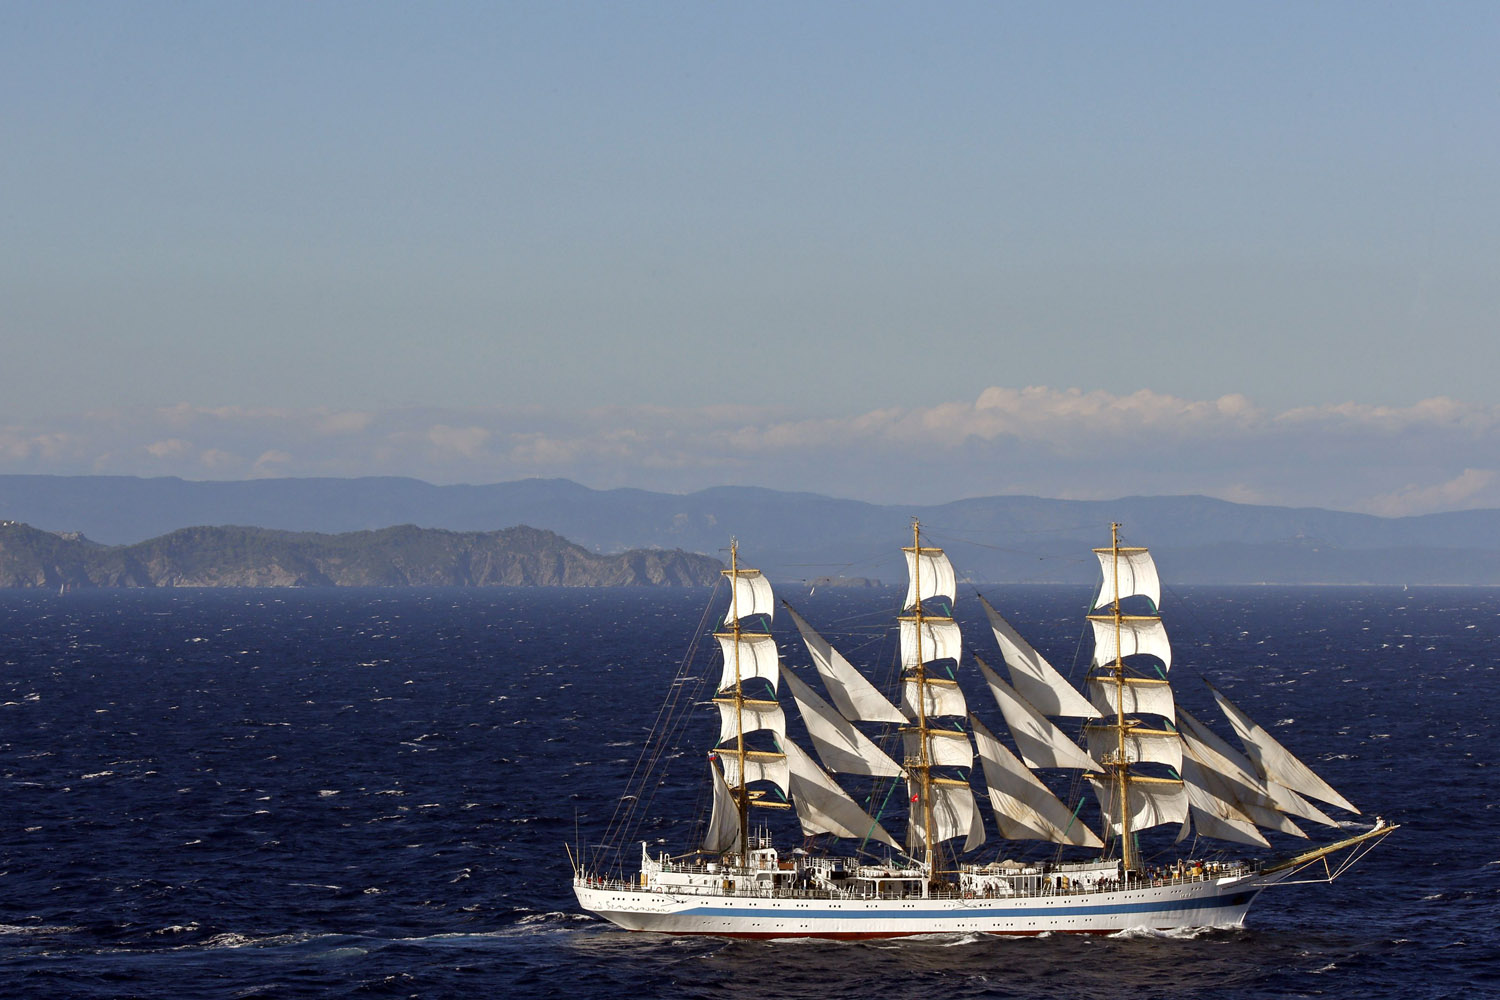 Sept. 30, 2013. Russian sailing ship 'Mir' participates in a parade for the Mediterranean Tall Ships regatta in Toulon, France.